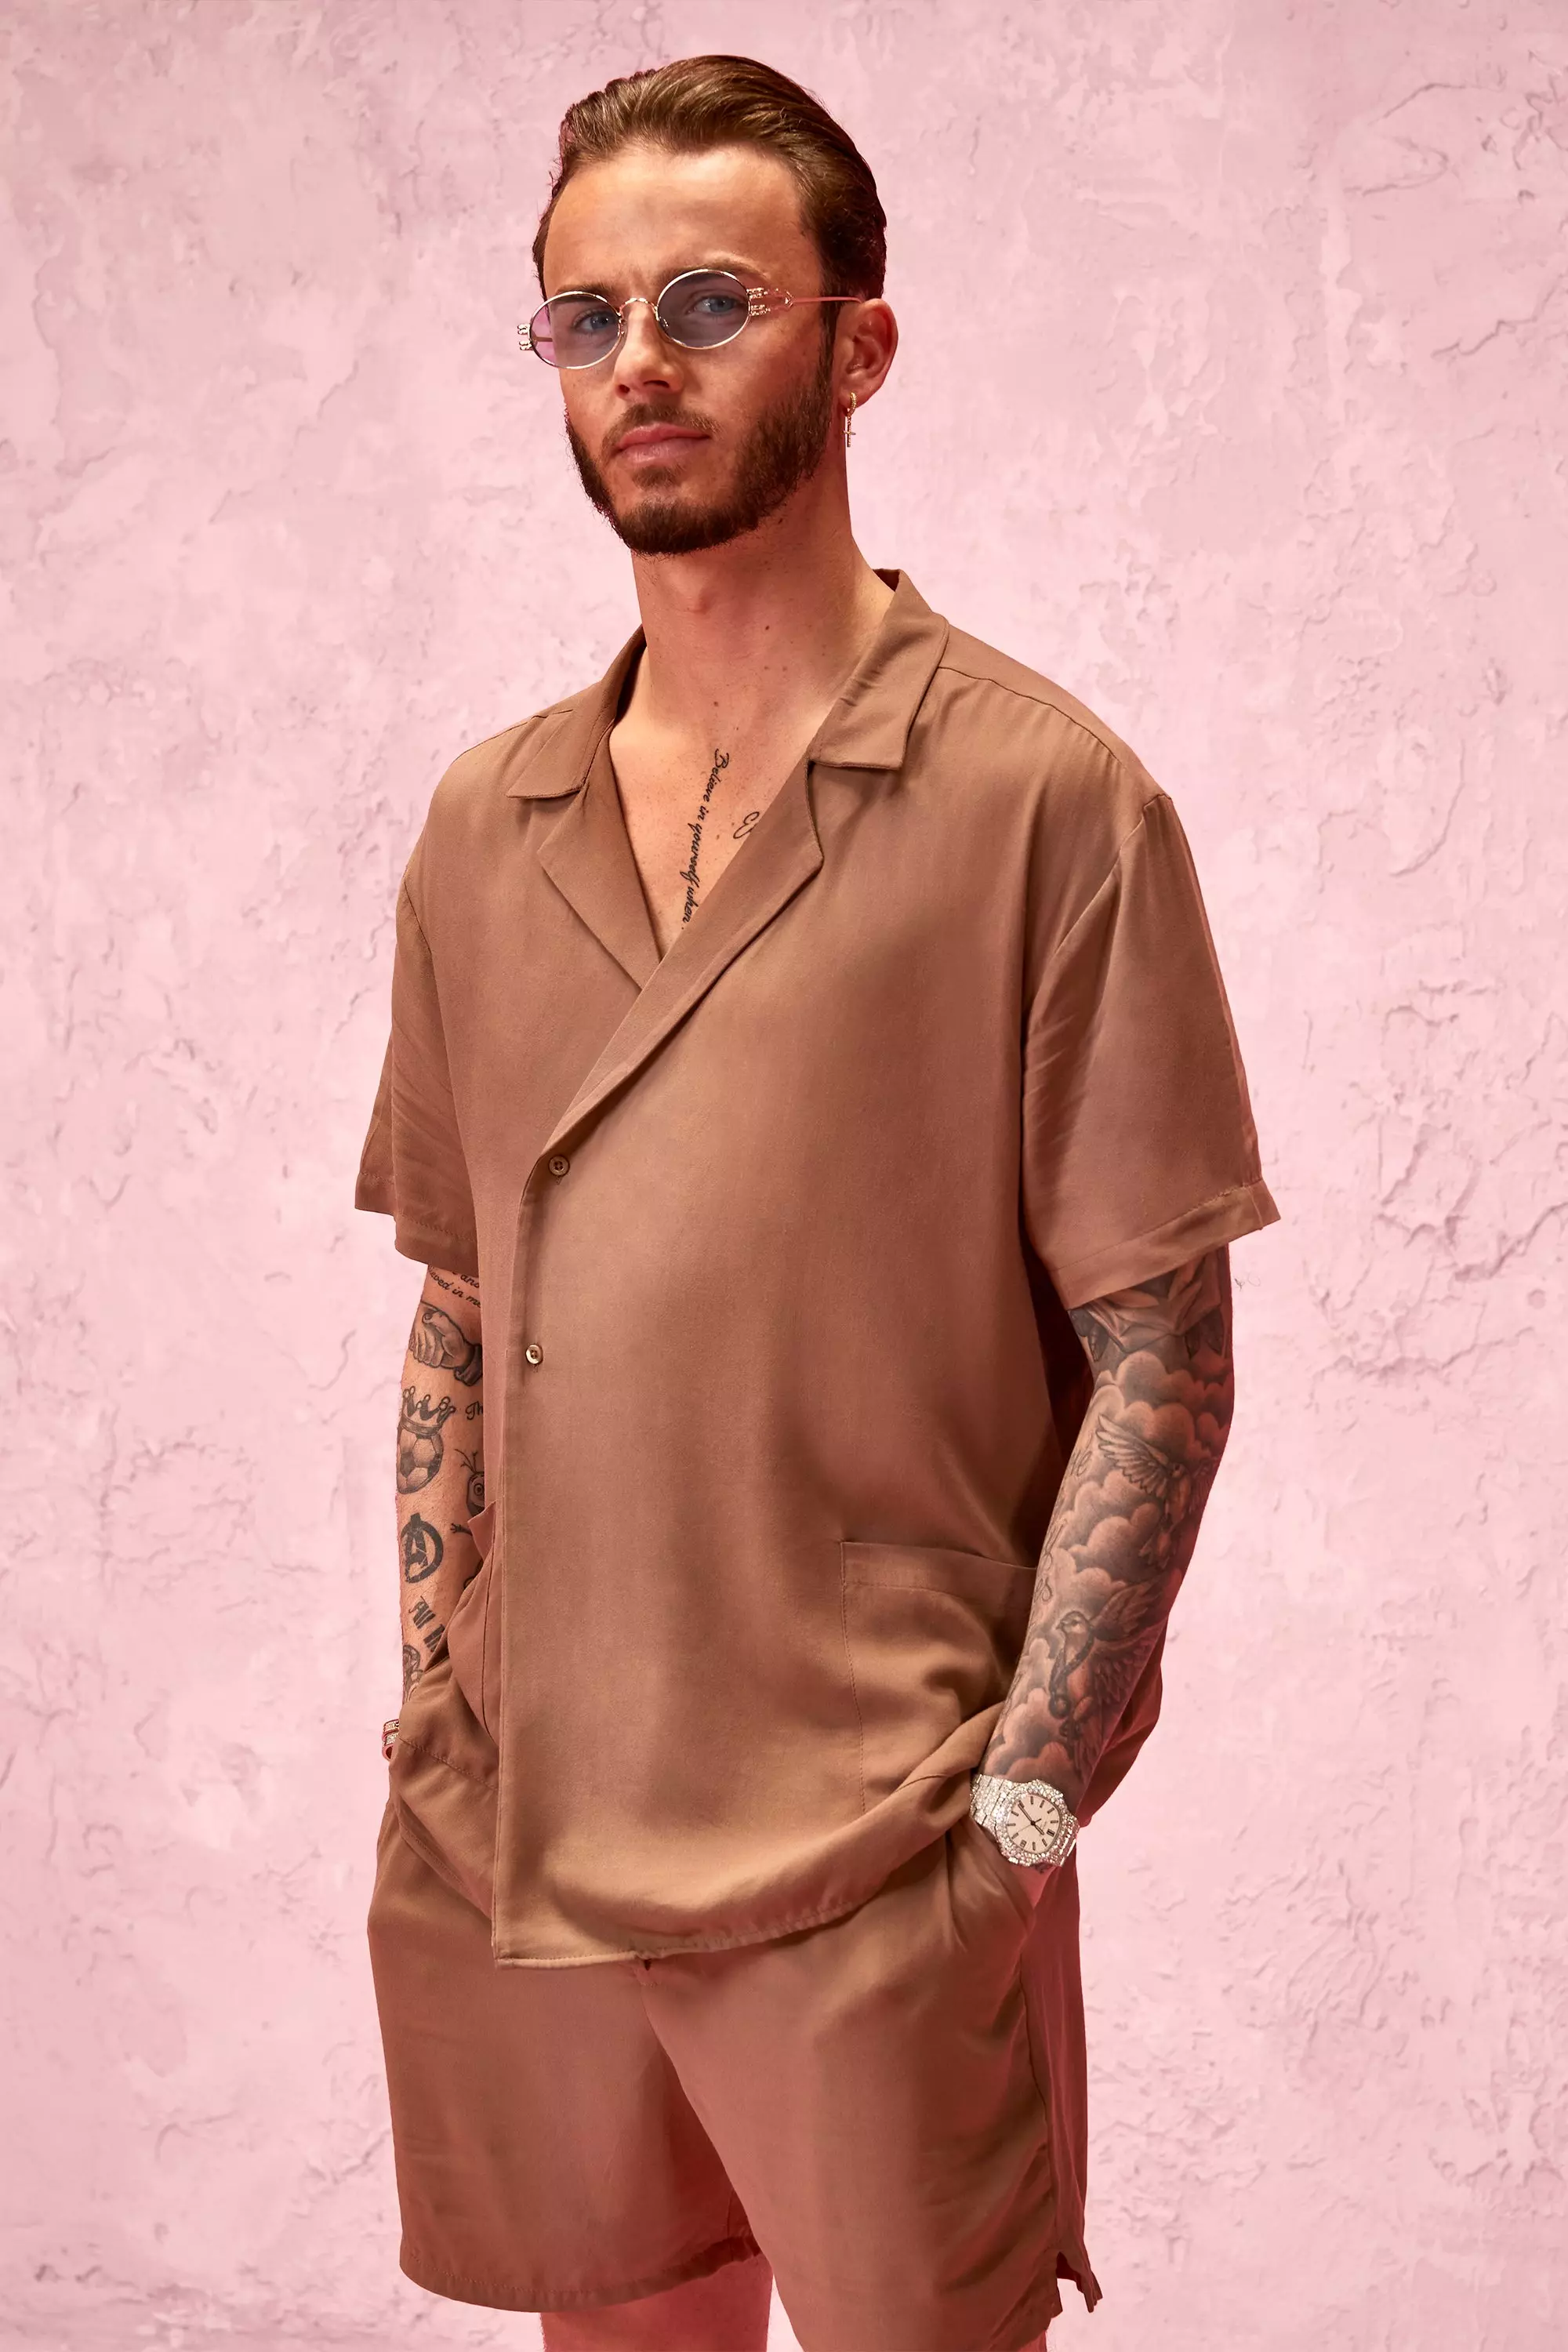 BoohooMAN Short Sleeve Revere Textured Shirt & Short Set for Men